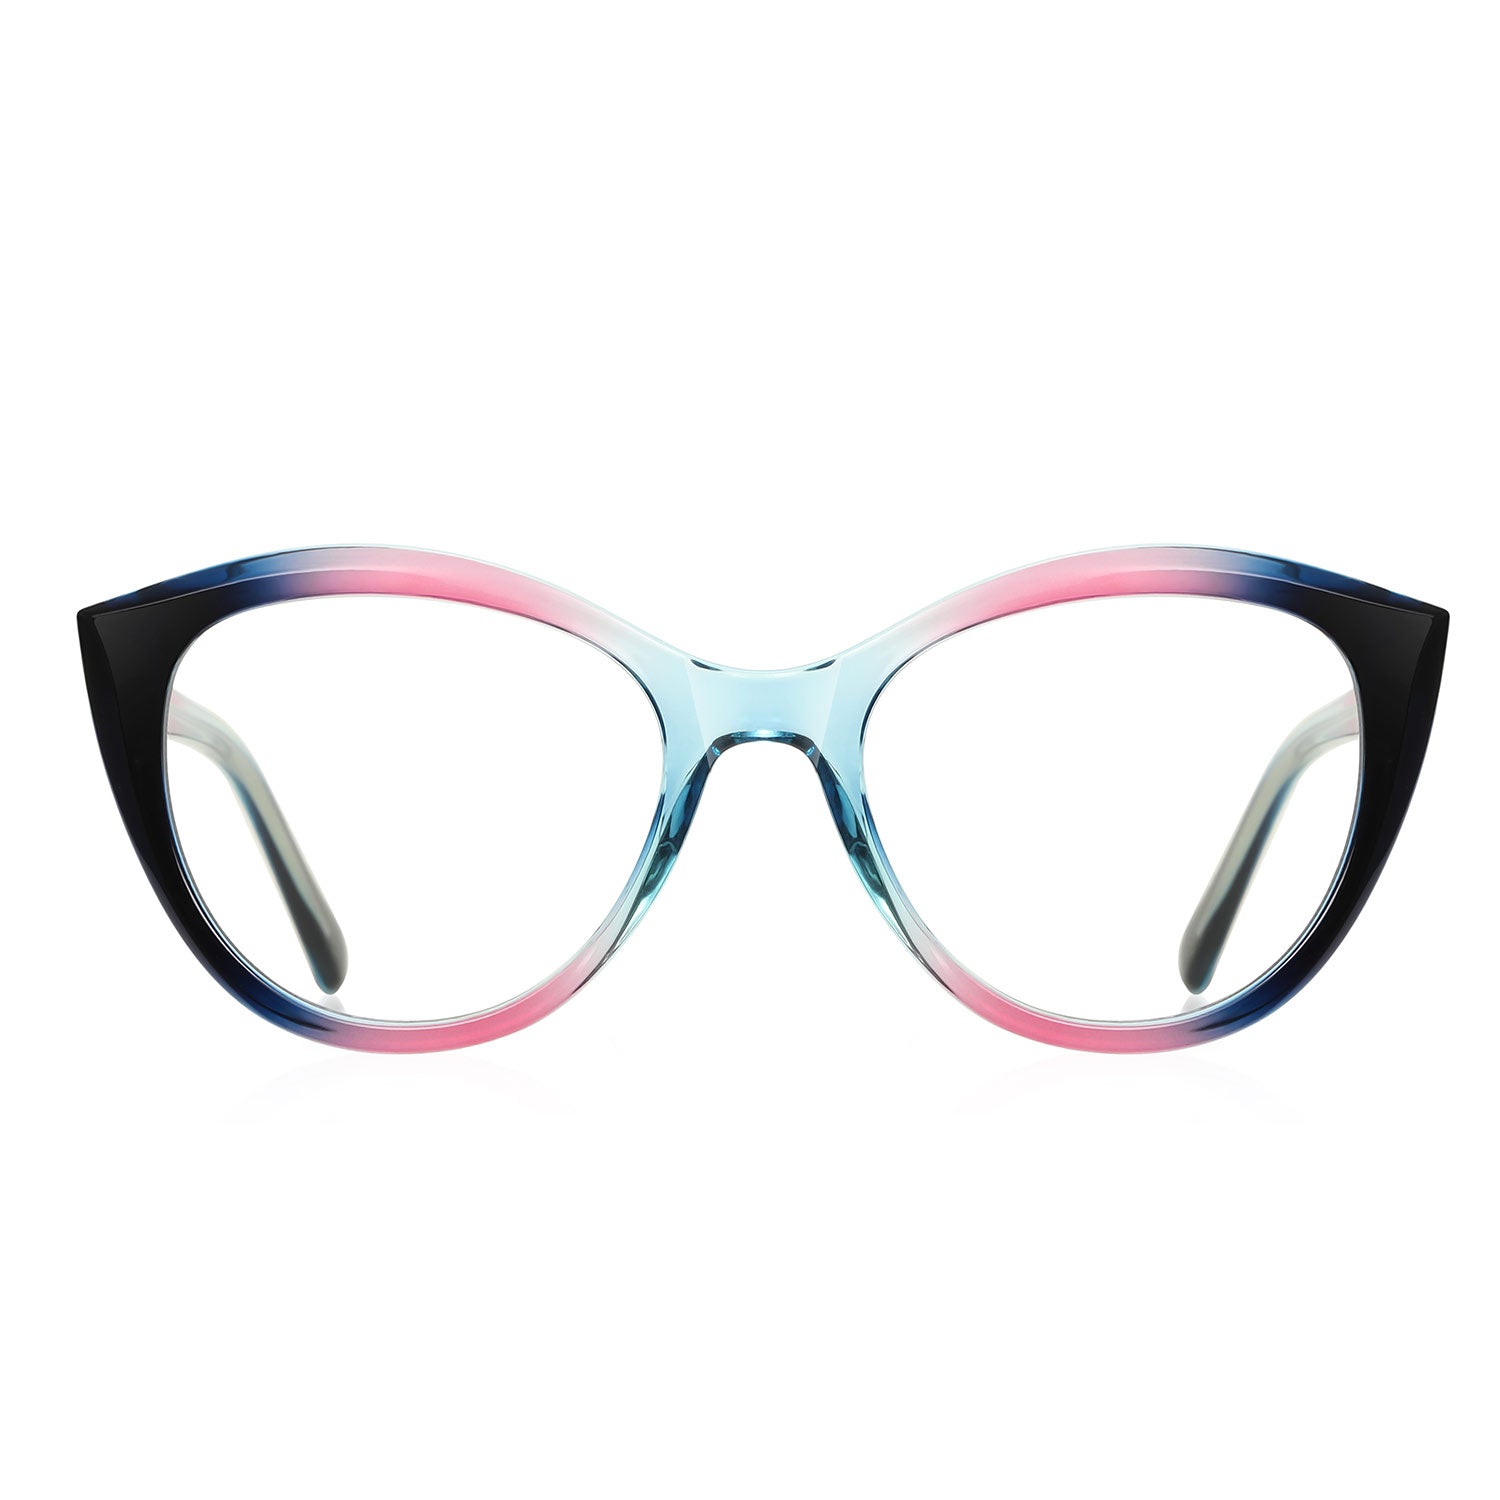 ELKLOOK Cat Eye Glasses Frames Online for Women 5 Day Rush Delivery